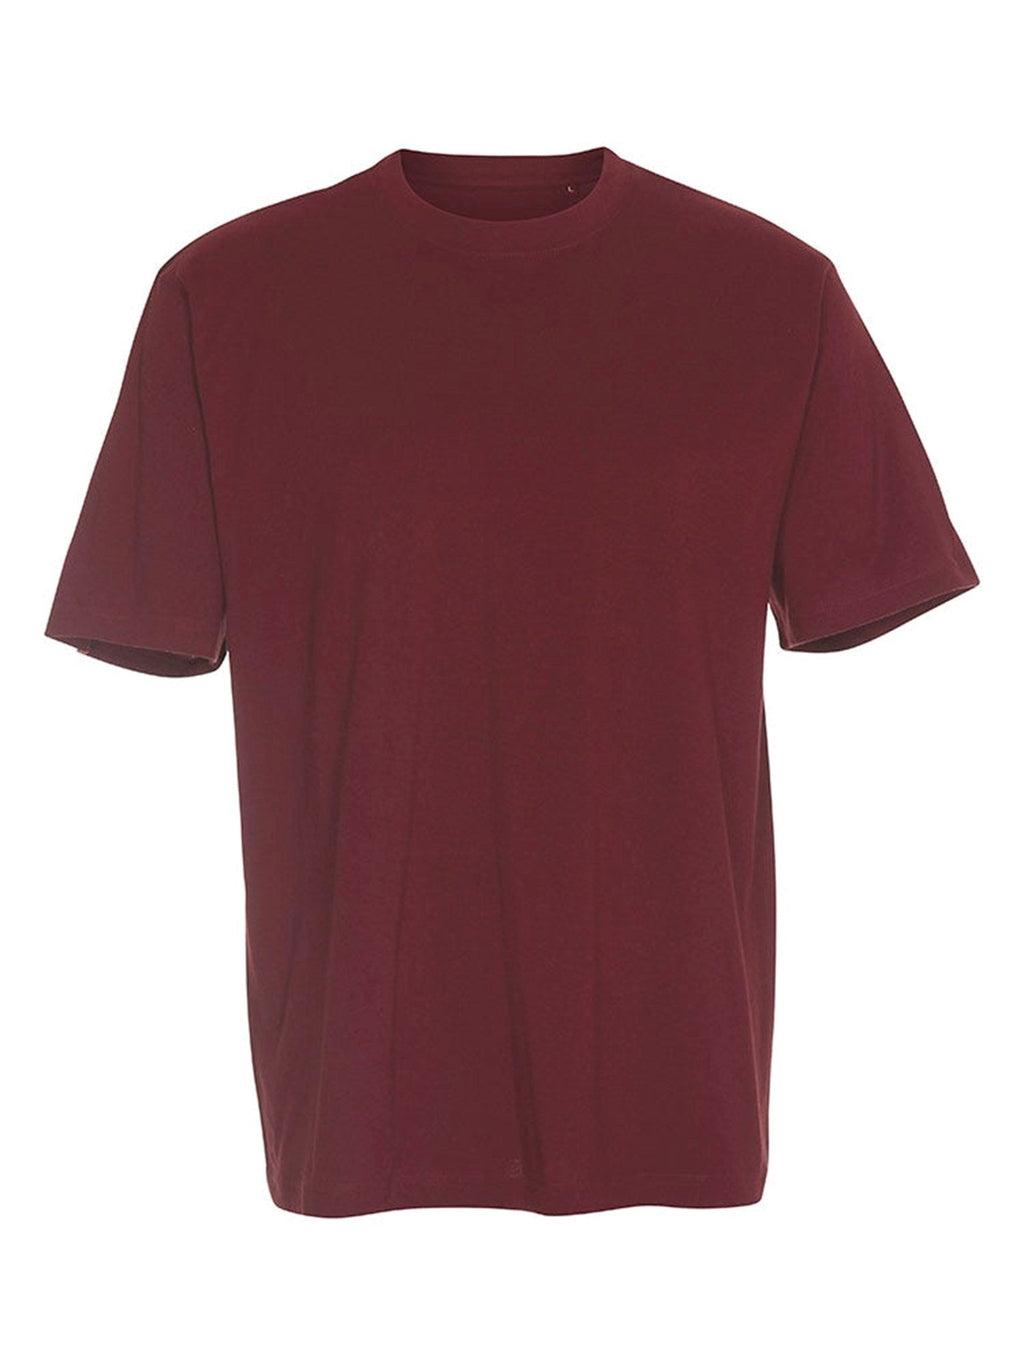 Oversized t-shirt - Burgundy